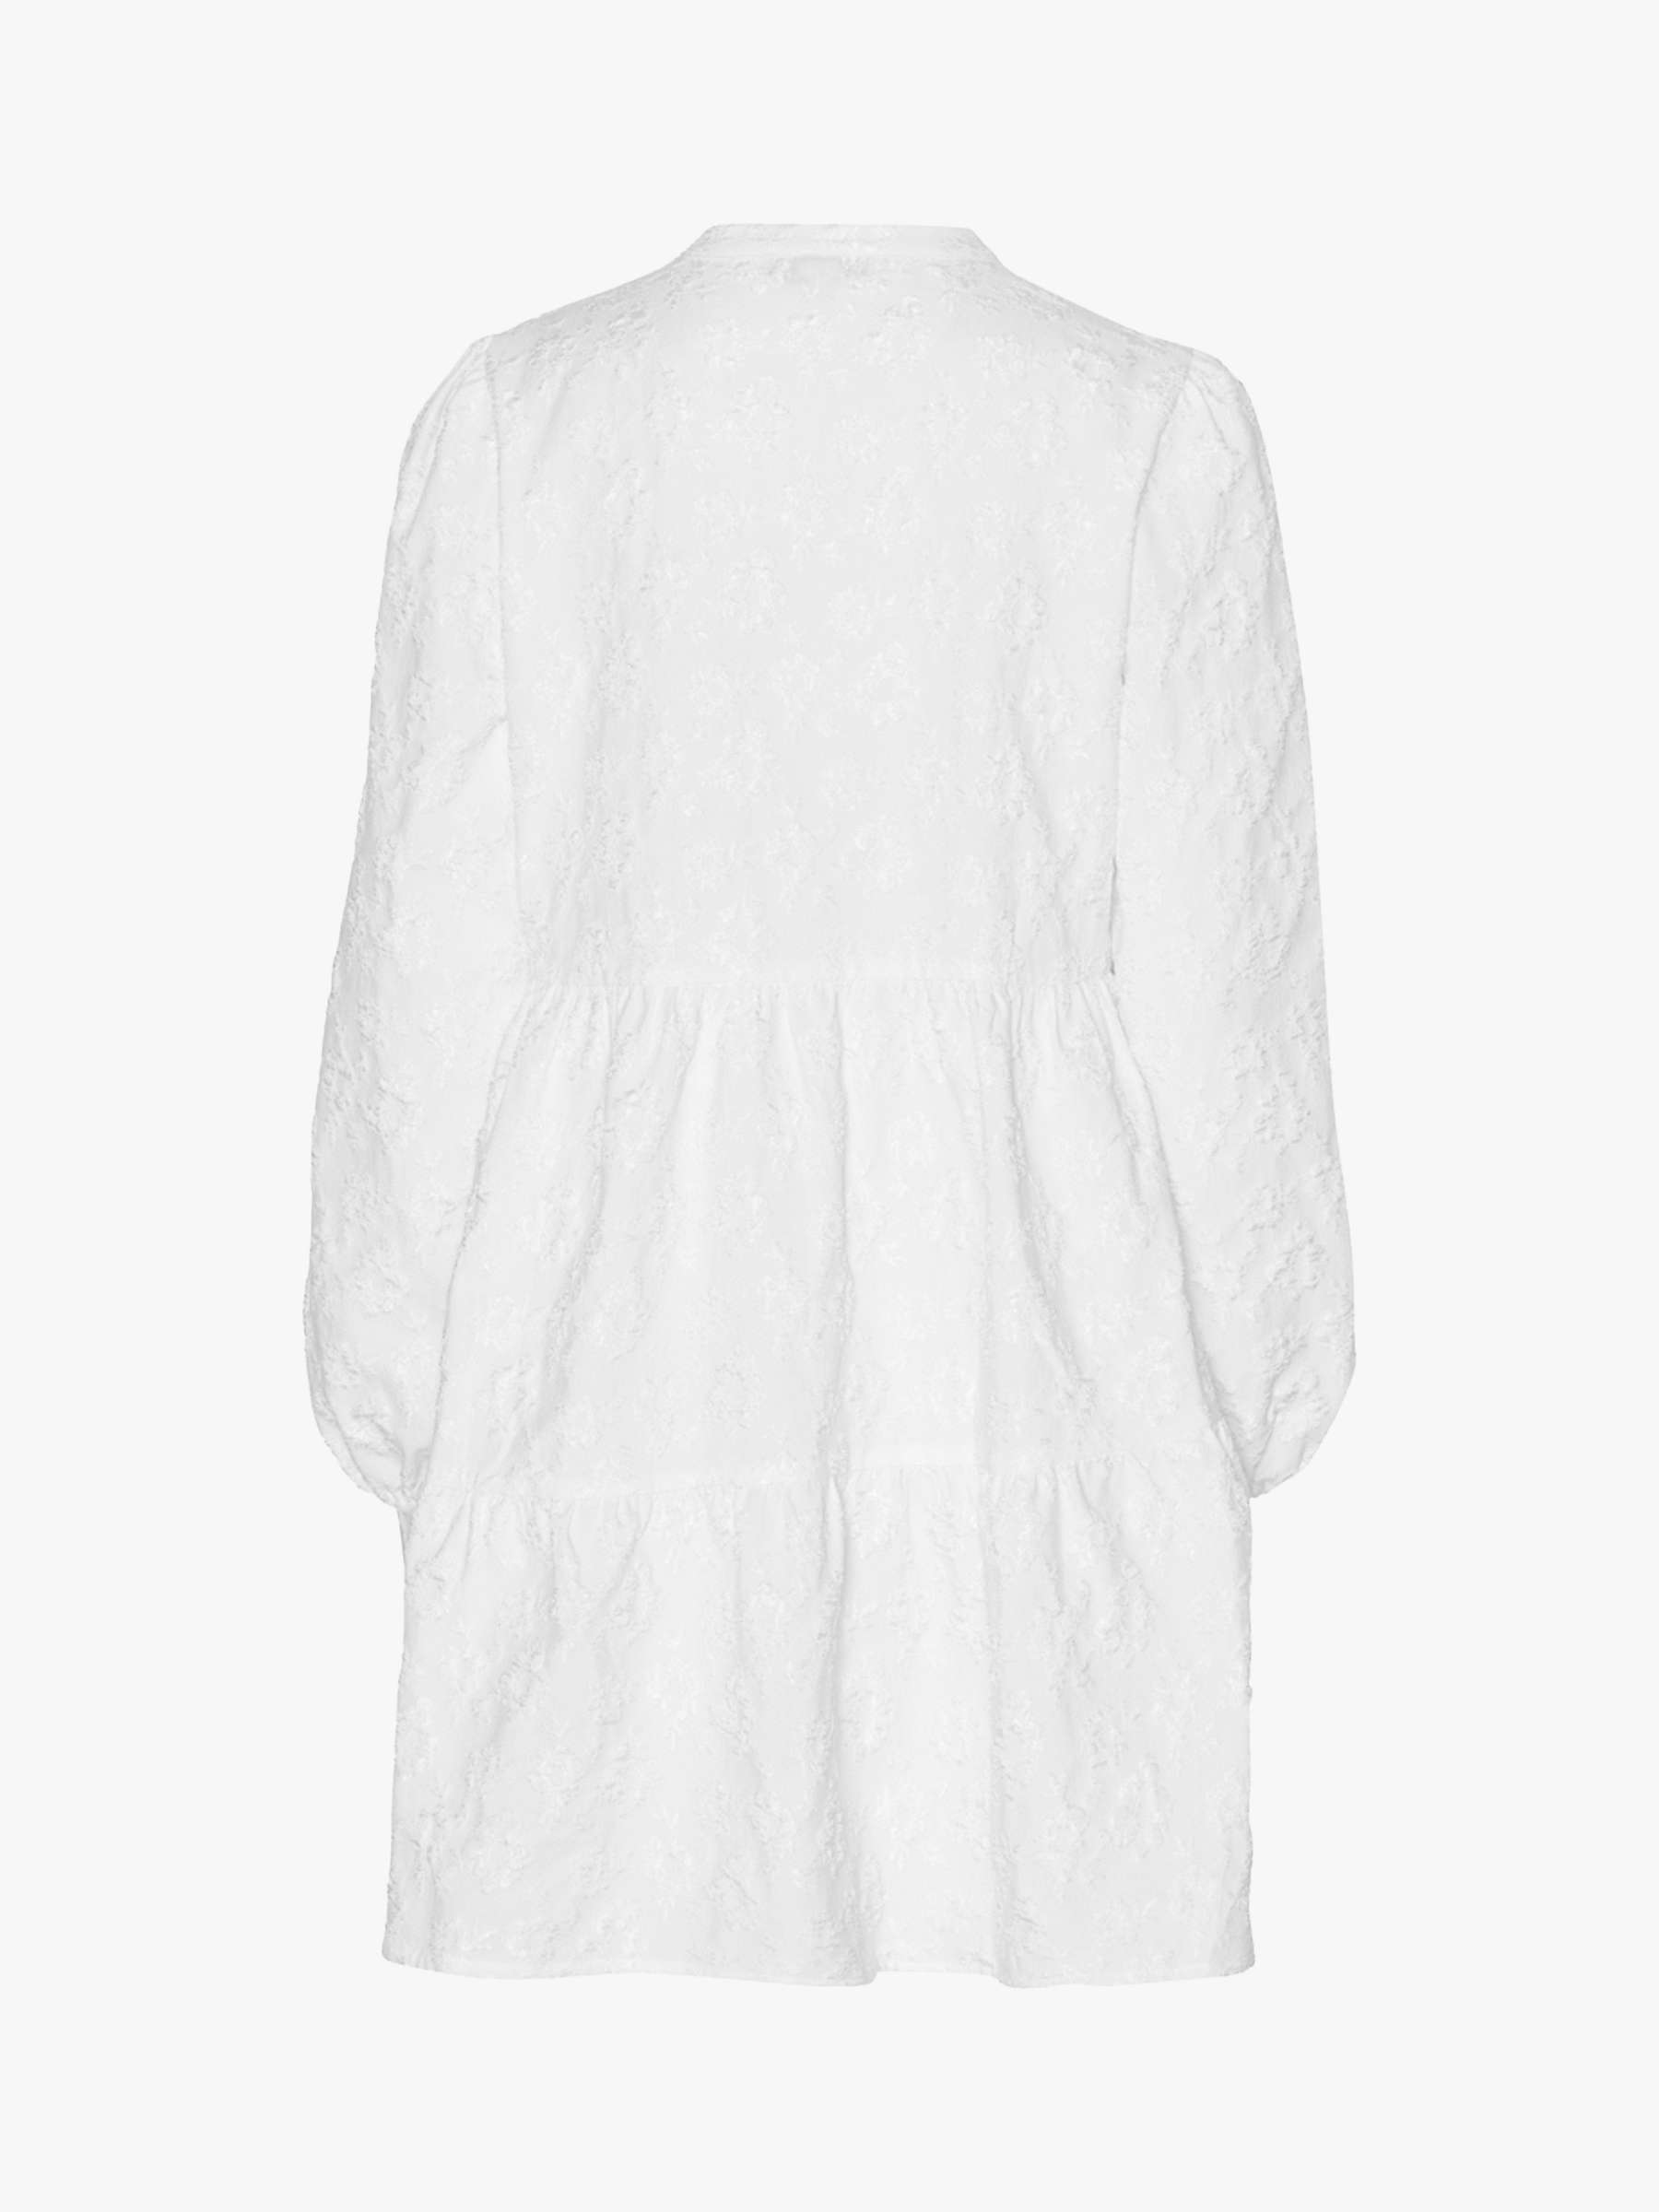 Buy A-VIEW Ida Mini Dress, 000 White Online at johnlewis.com